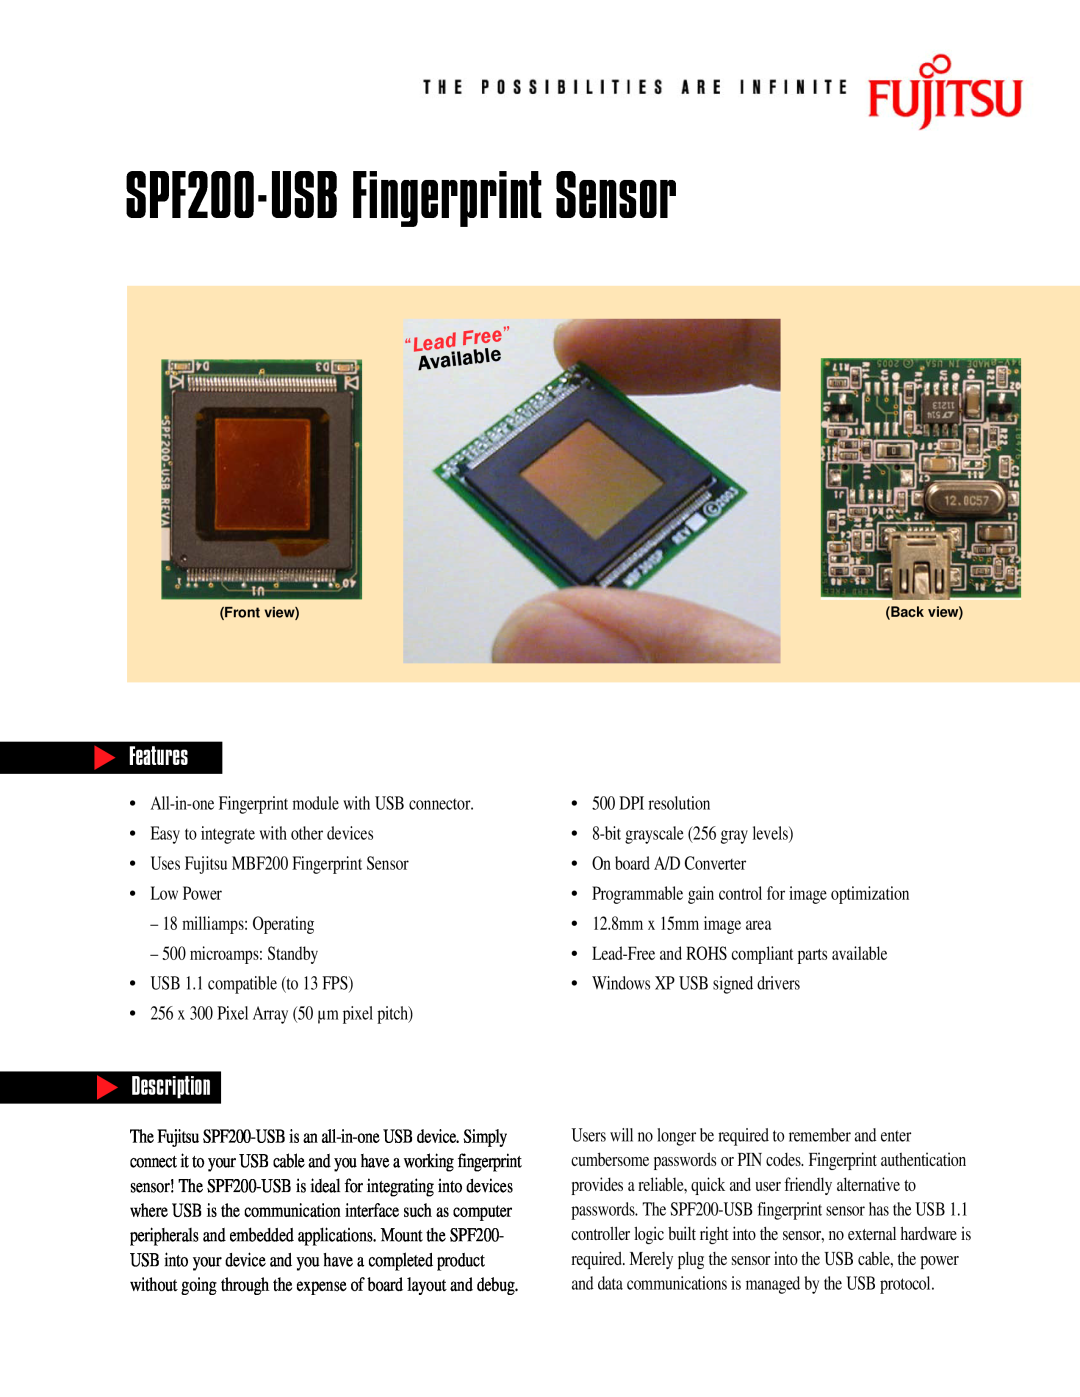 Fujitsu SPF 200 manual Features, Description, SPF200-USB Fingerprint Sensor, “Lead, Free, Available 